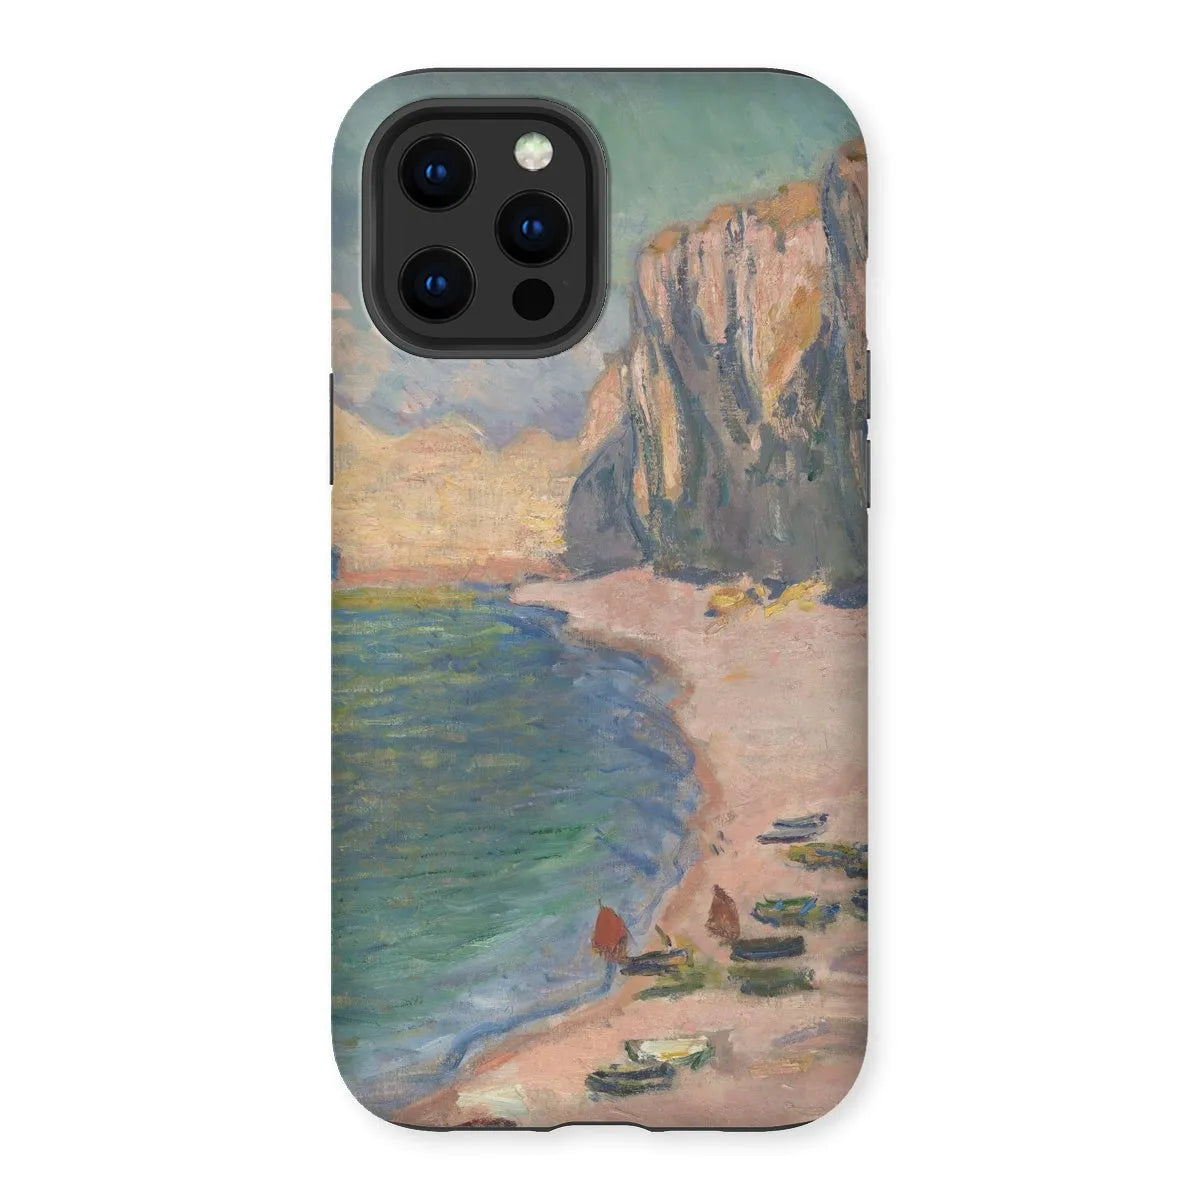 étretat - Impressionist Art Phone Case - Claude Monet - Iphone 13 Pro Max / Matte - Mobile Phone Cases - Aesthetic Art